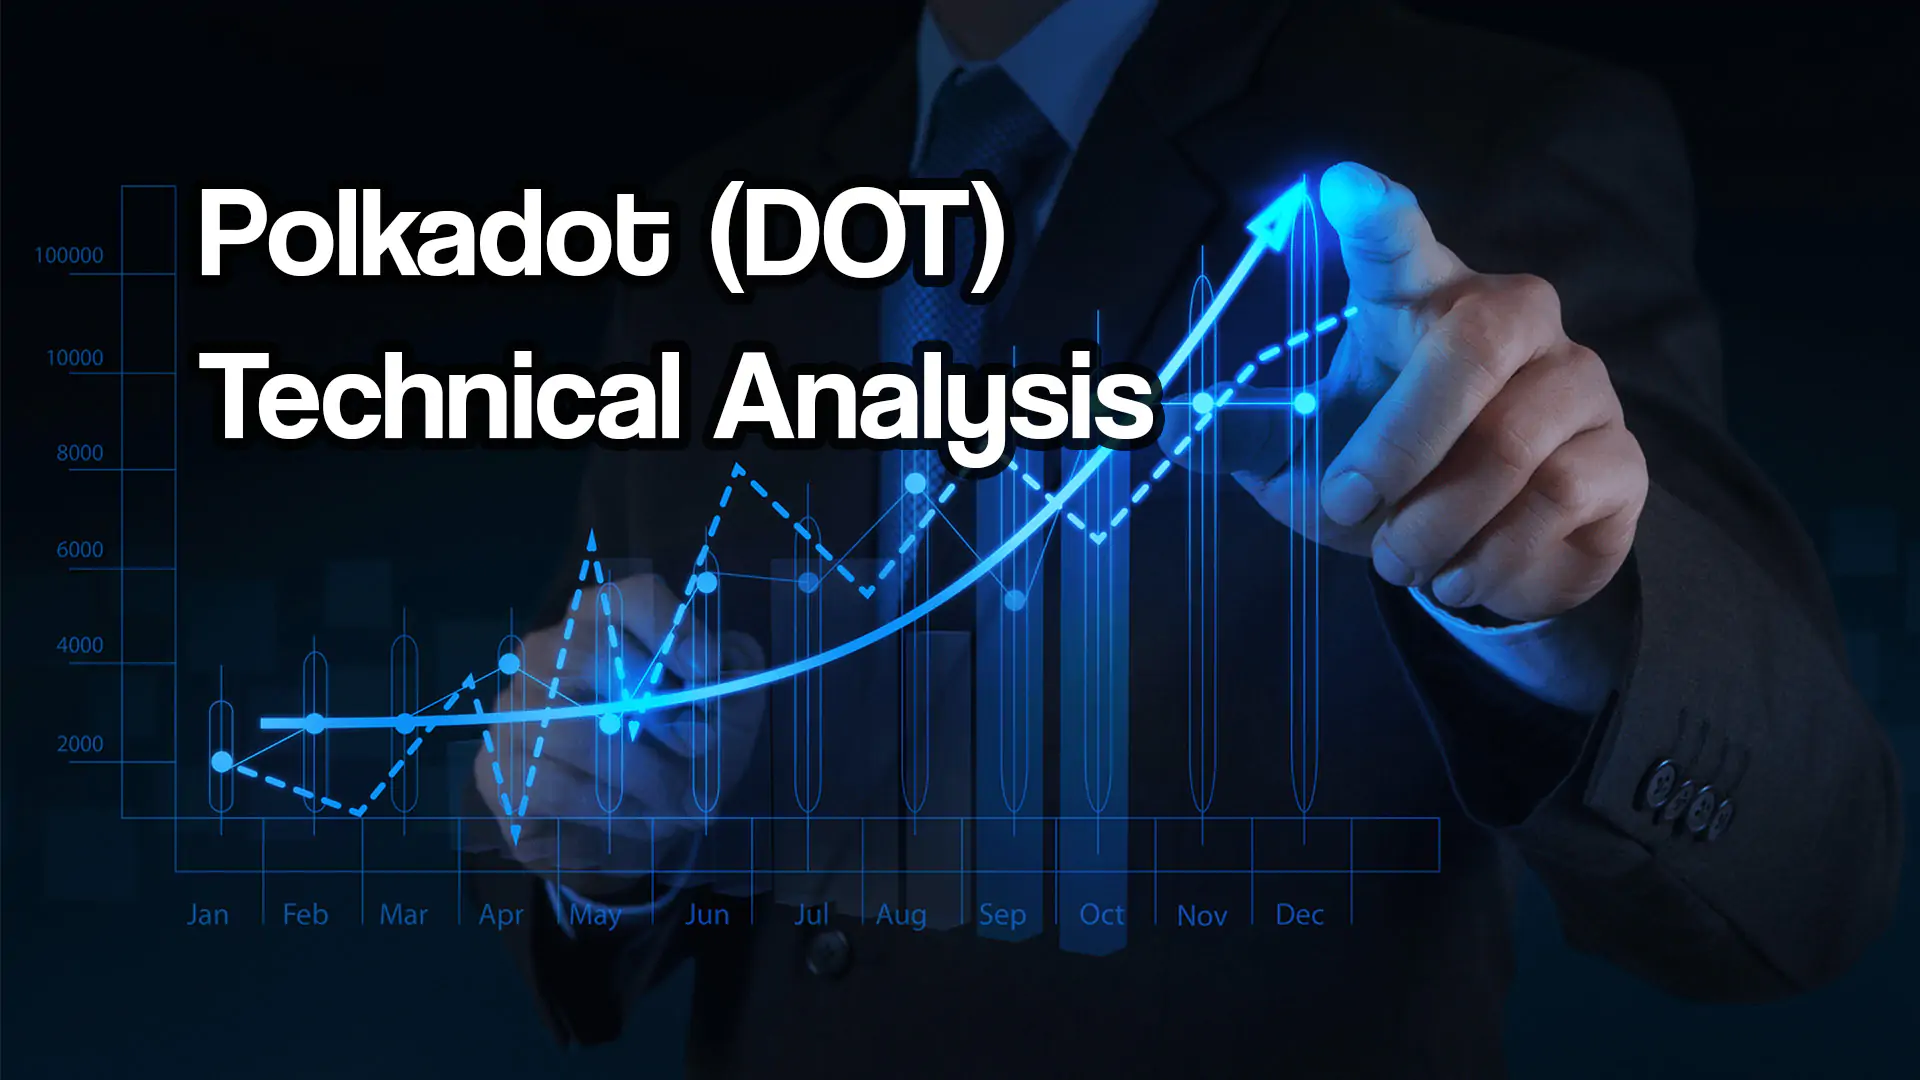 Polkadot (DOT) Technical Analysis